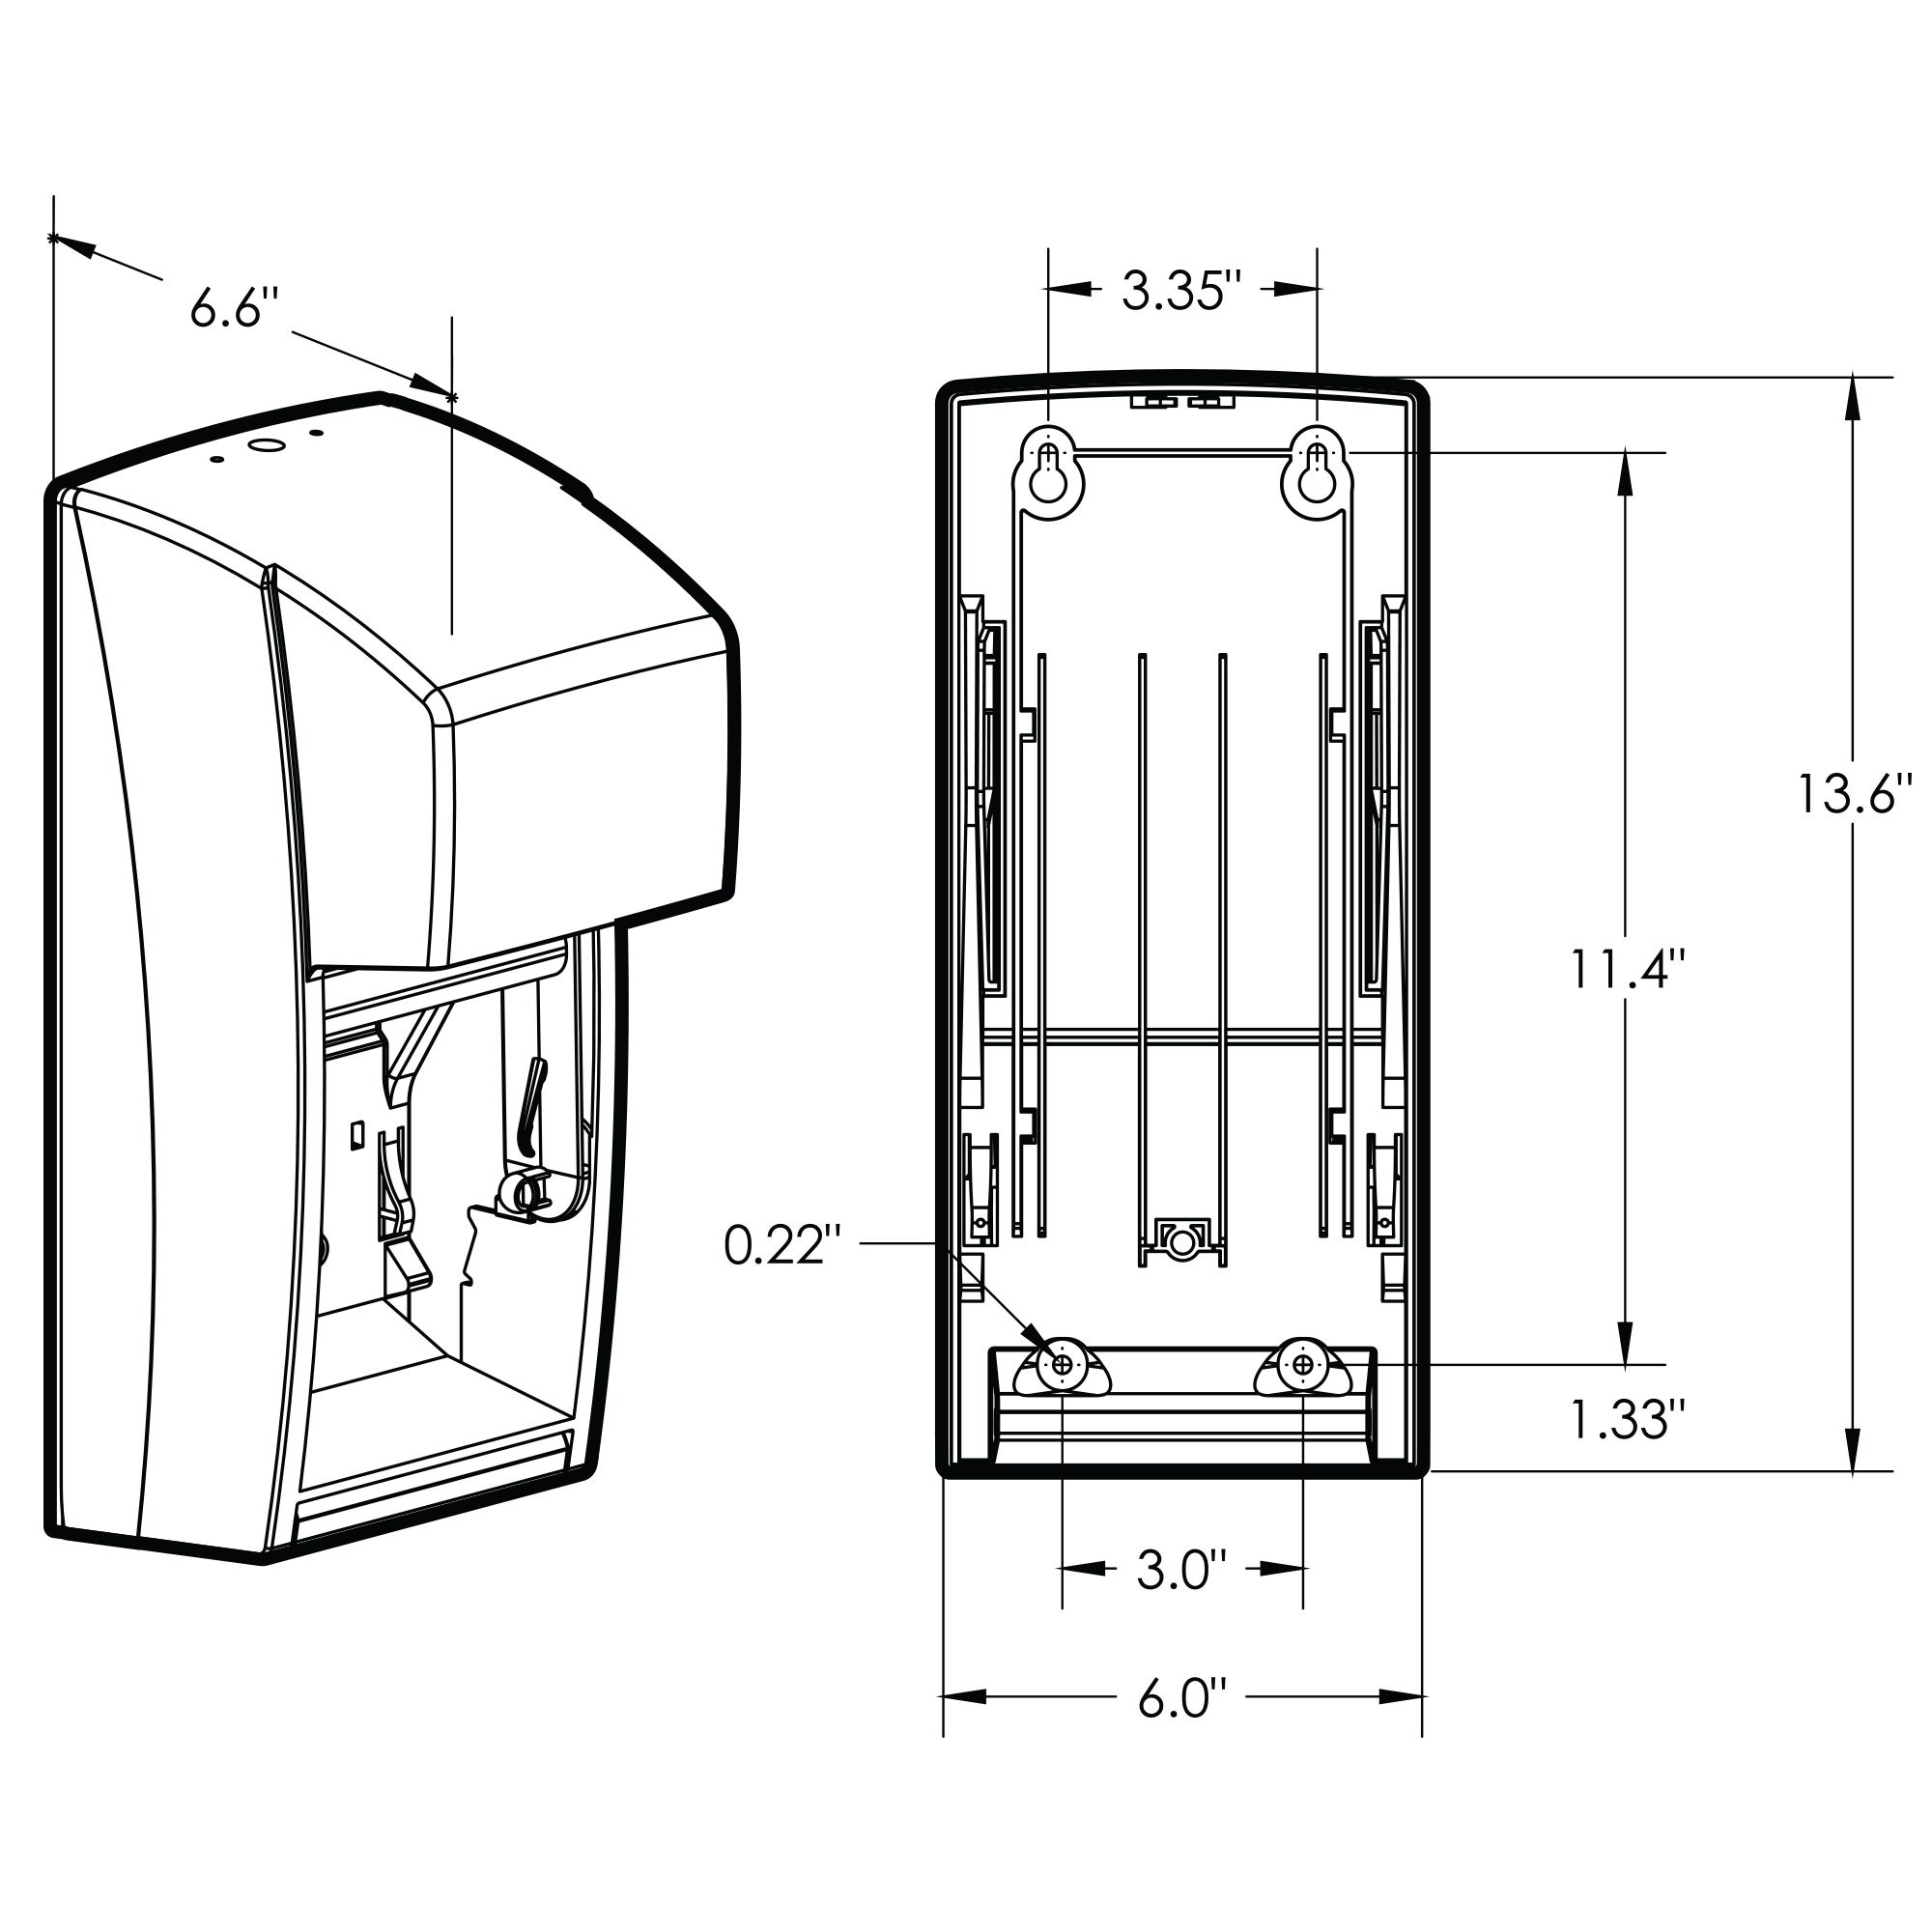 Picture of Coreless Double Roll Toilet Tissue Dispenser, 6 6/10 x 6 x13 6/10, Plastic, Smoke